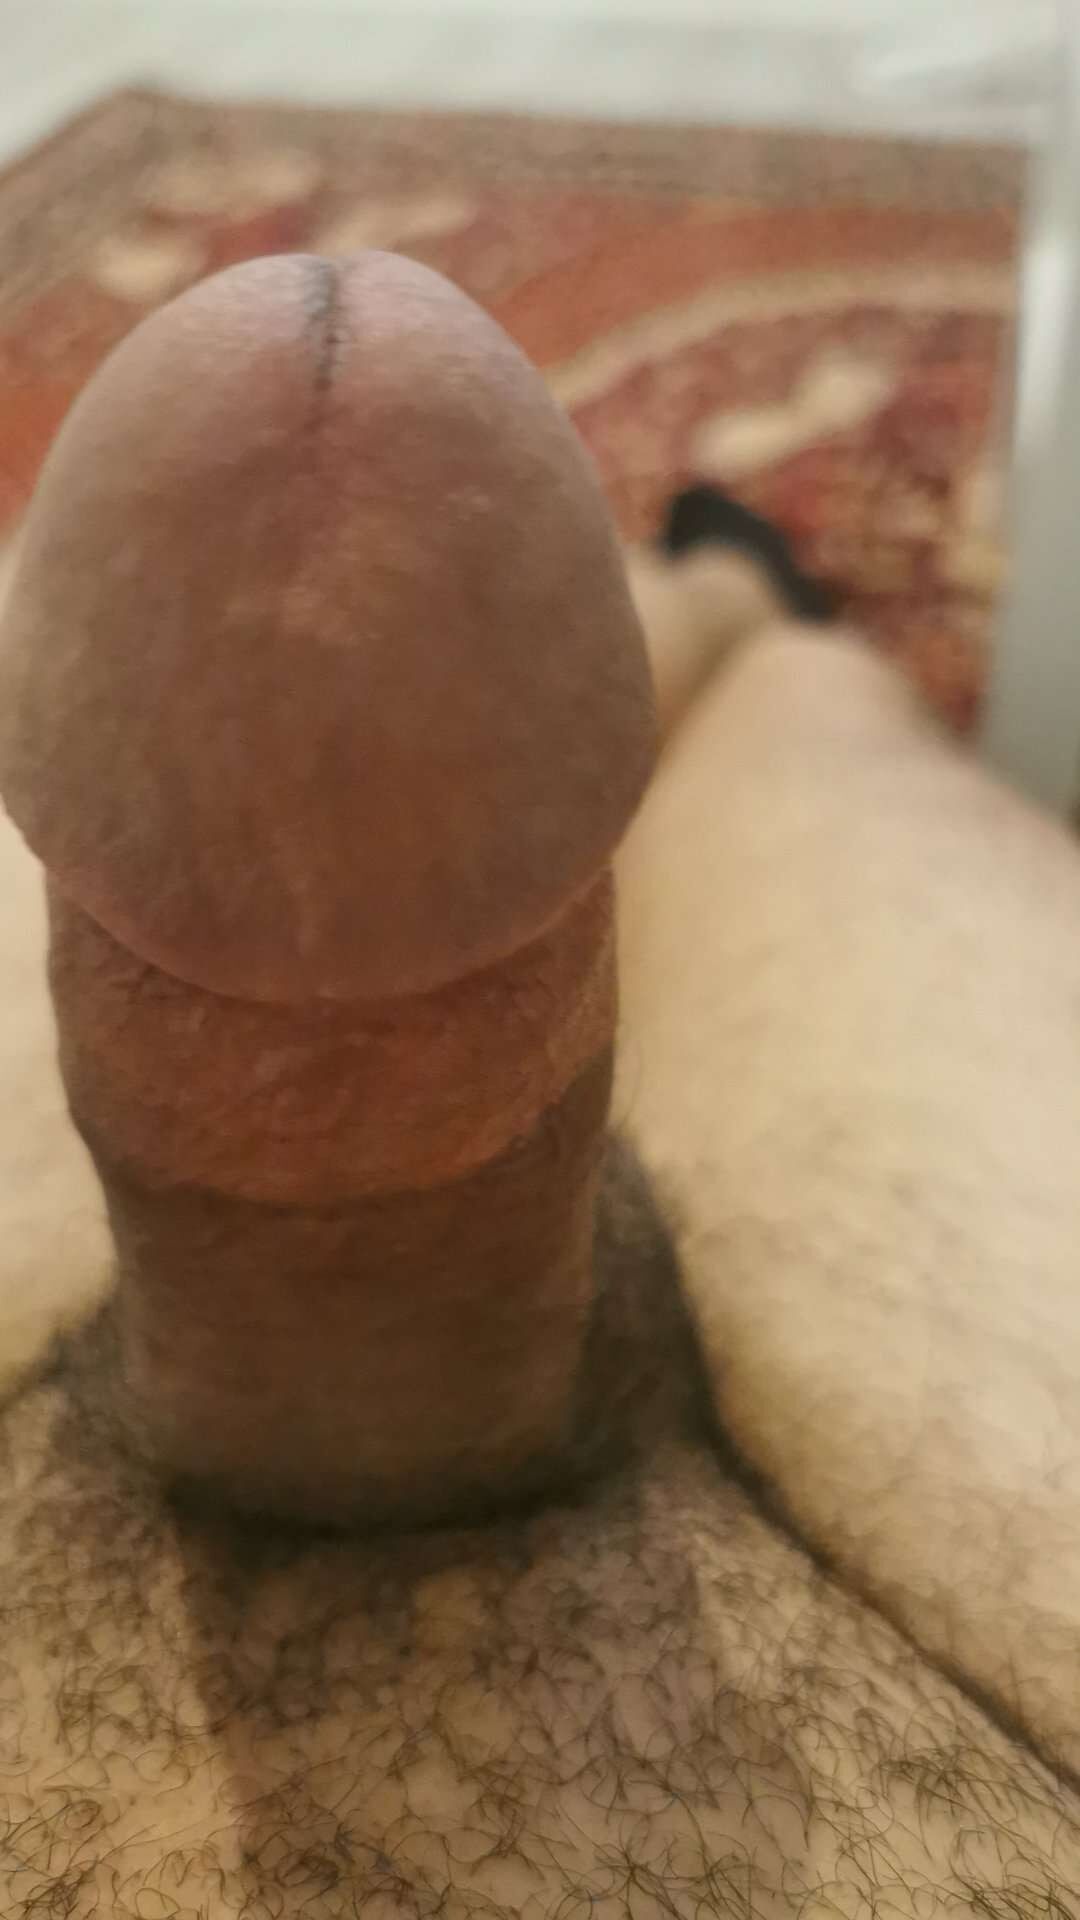 my Tunisian dick #3